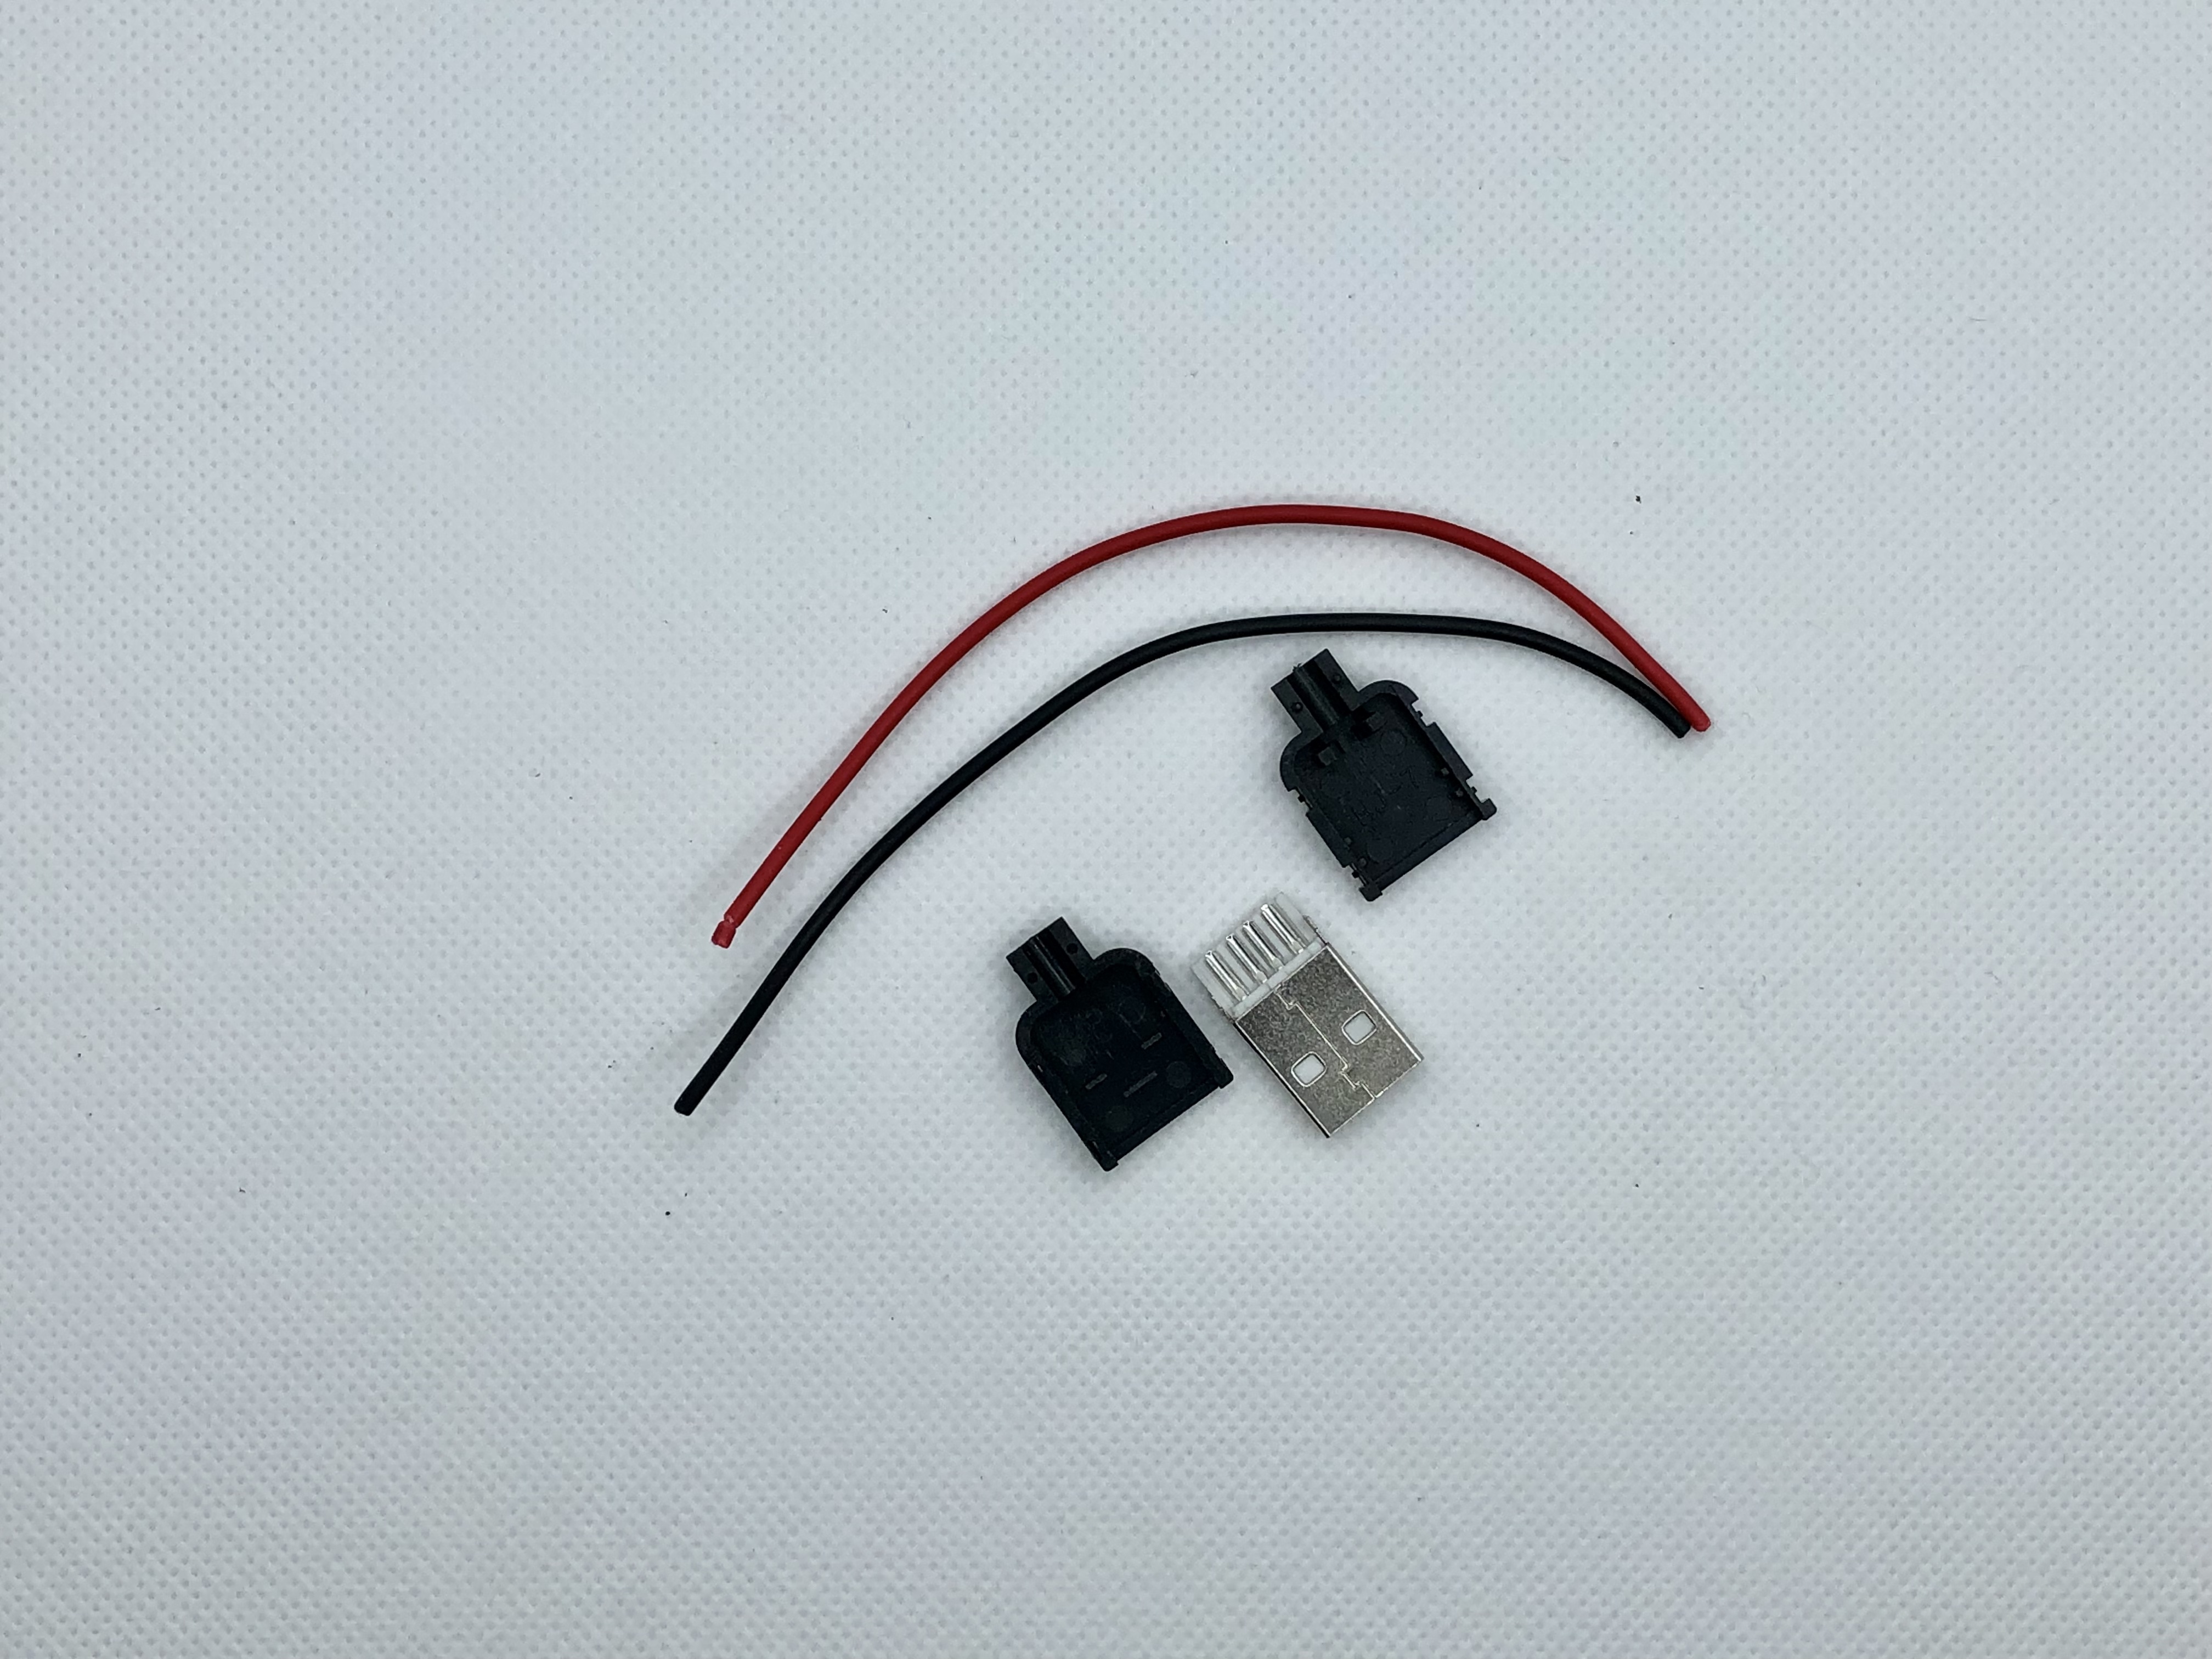 USB connector parts